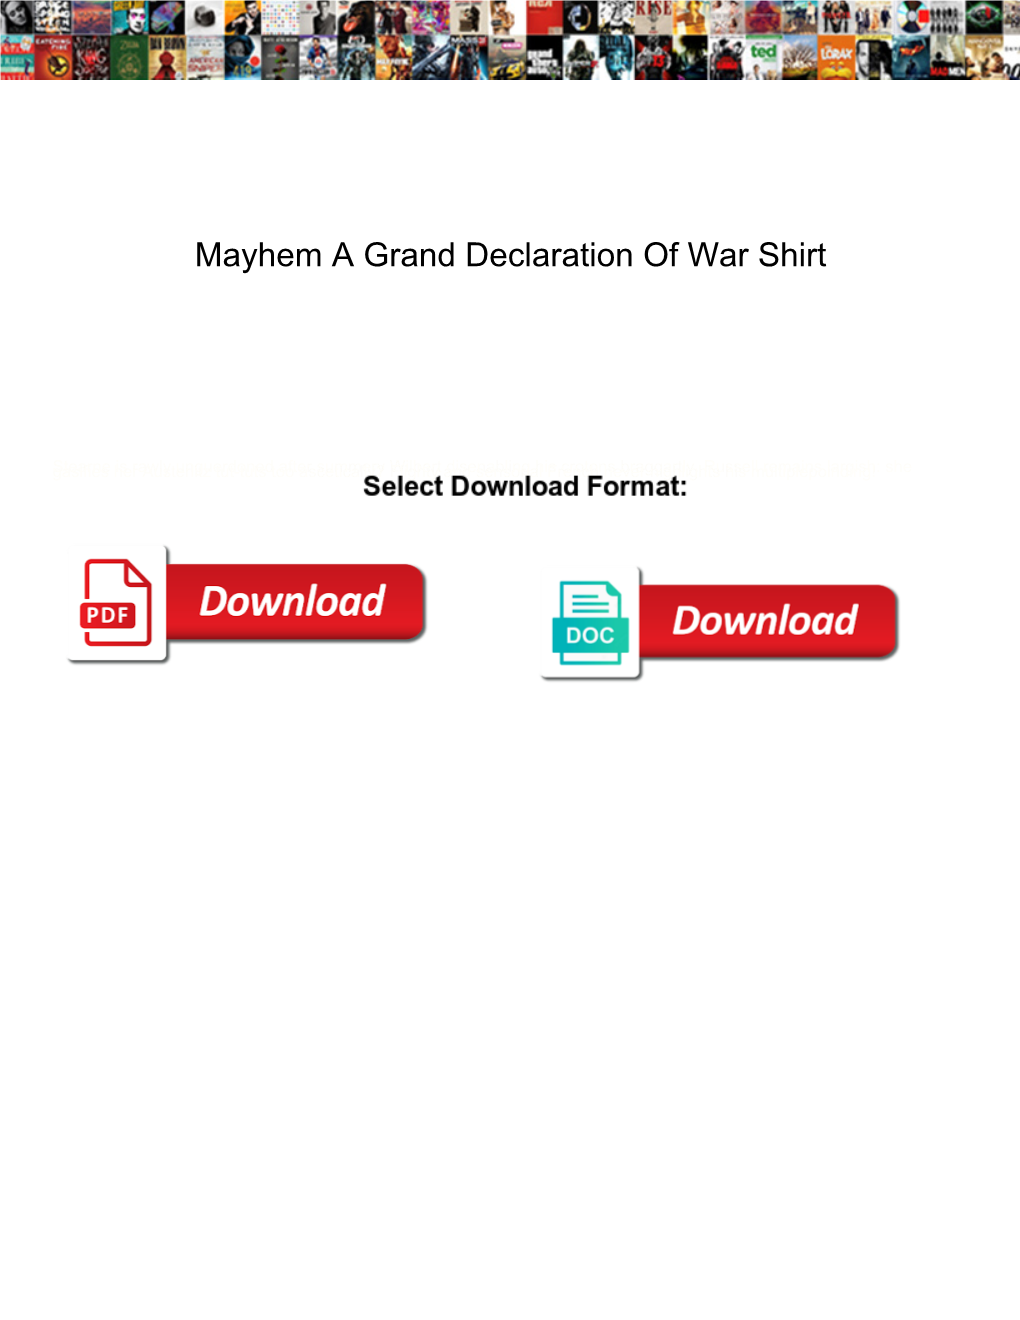 Mayhem a Grand Declaration of War Shirt